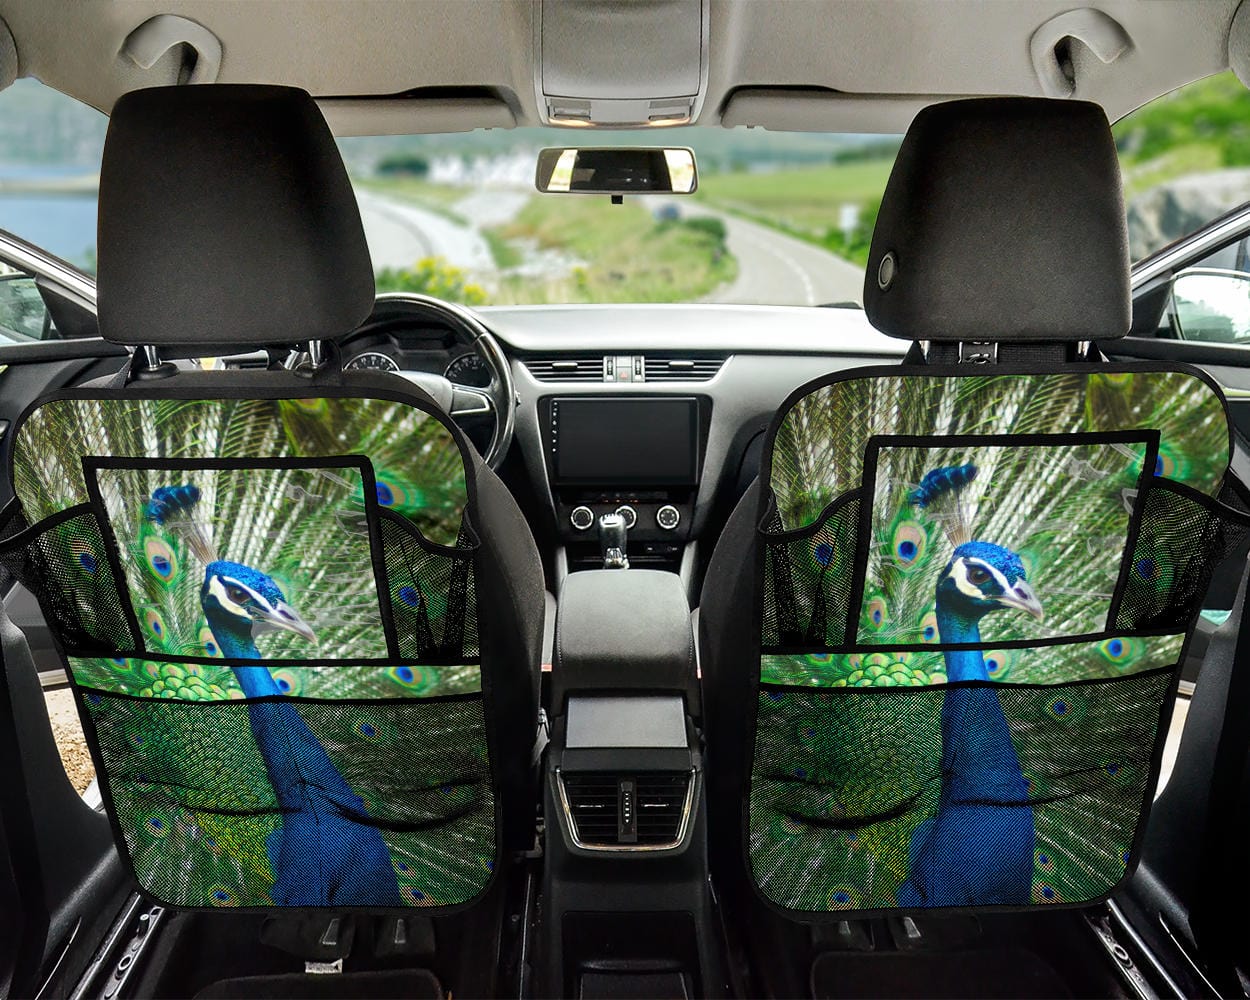 Car Back seat Organizer - Peacock - GiddyGoatStore